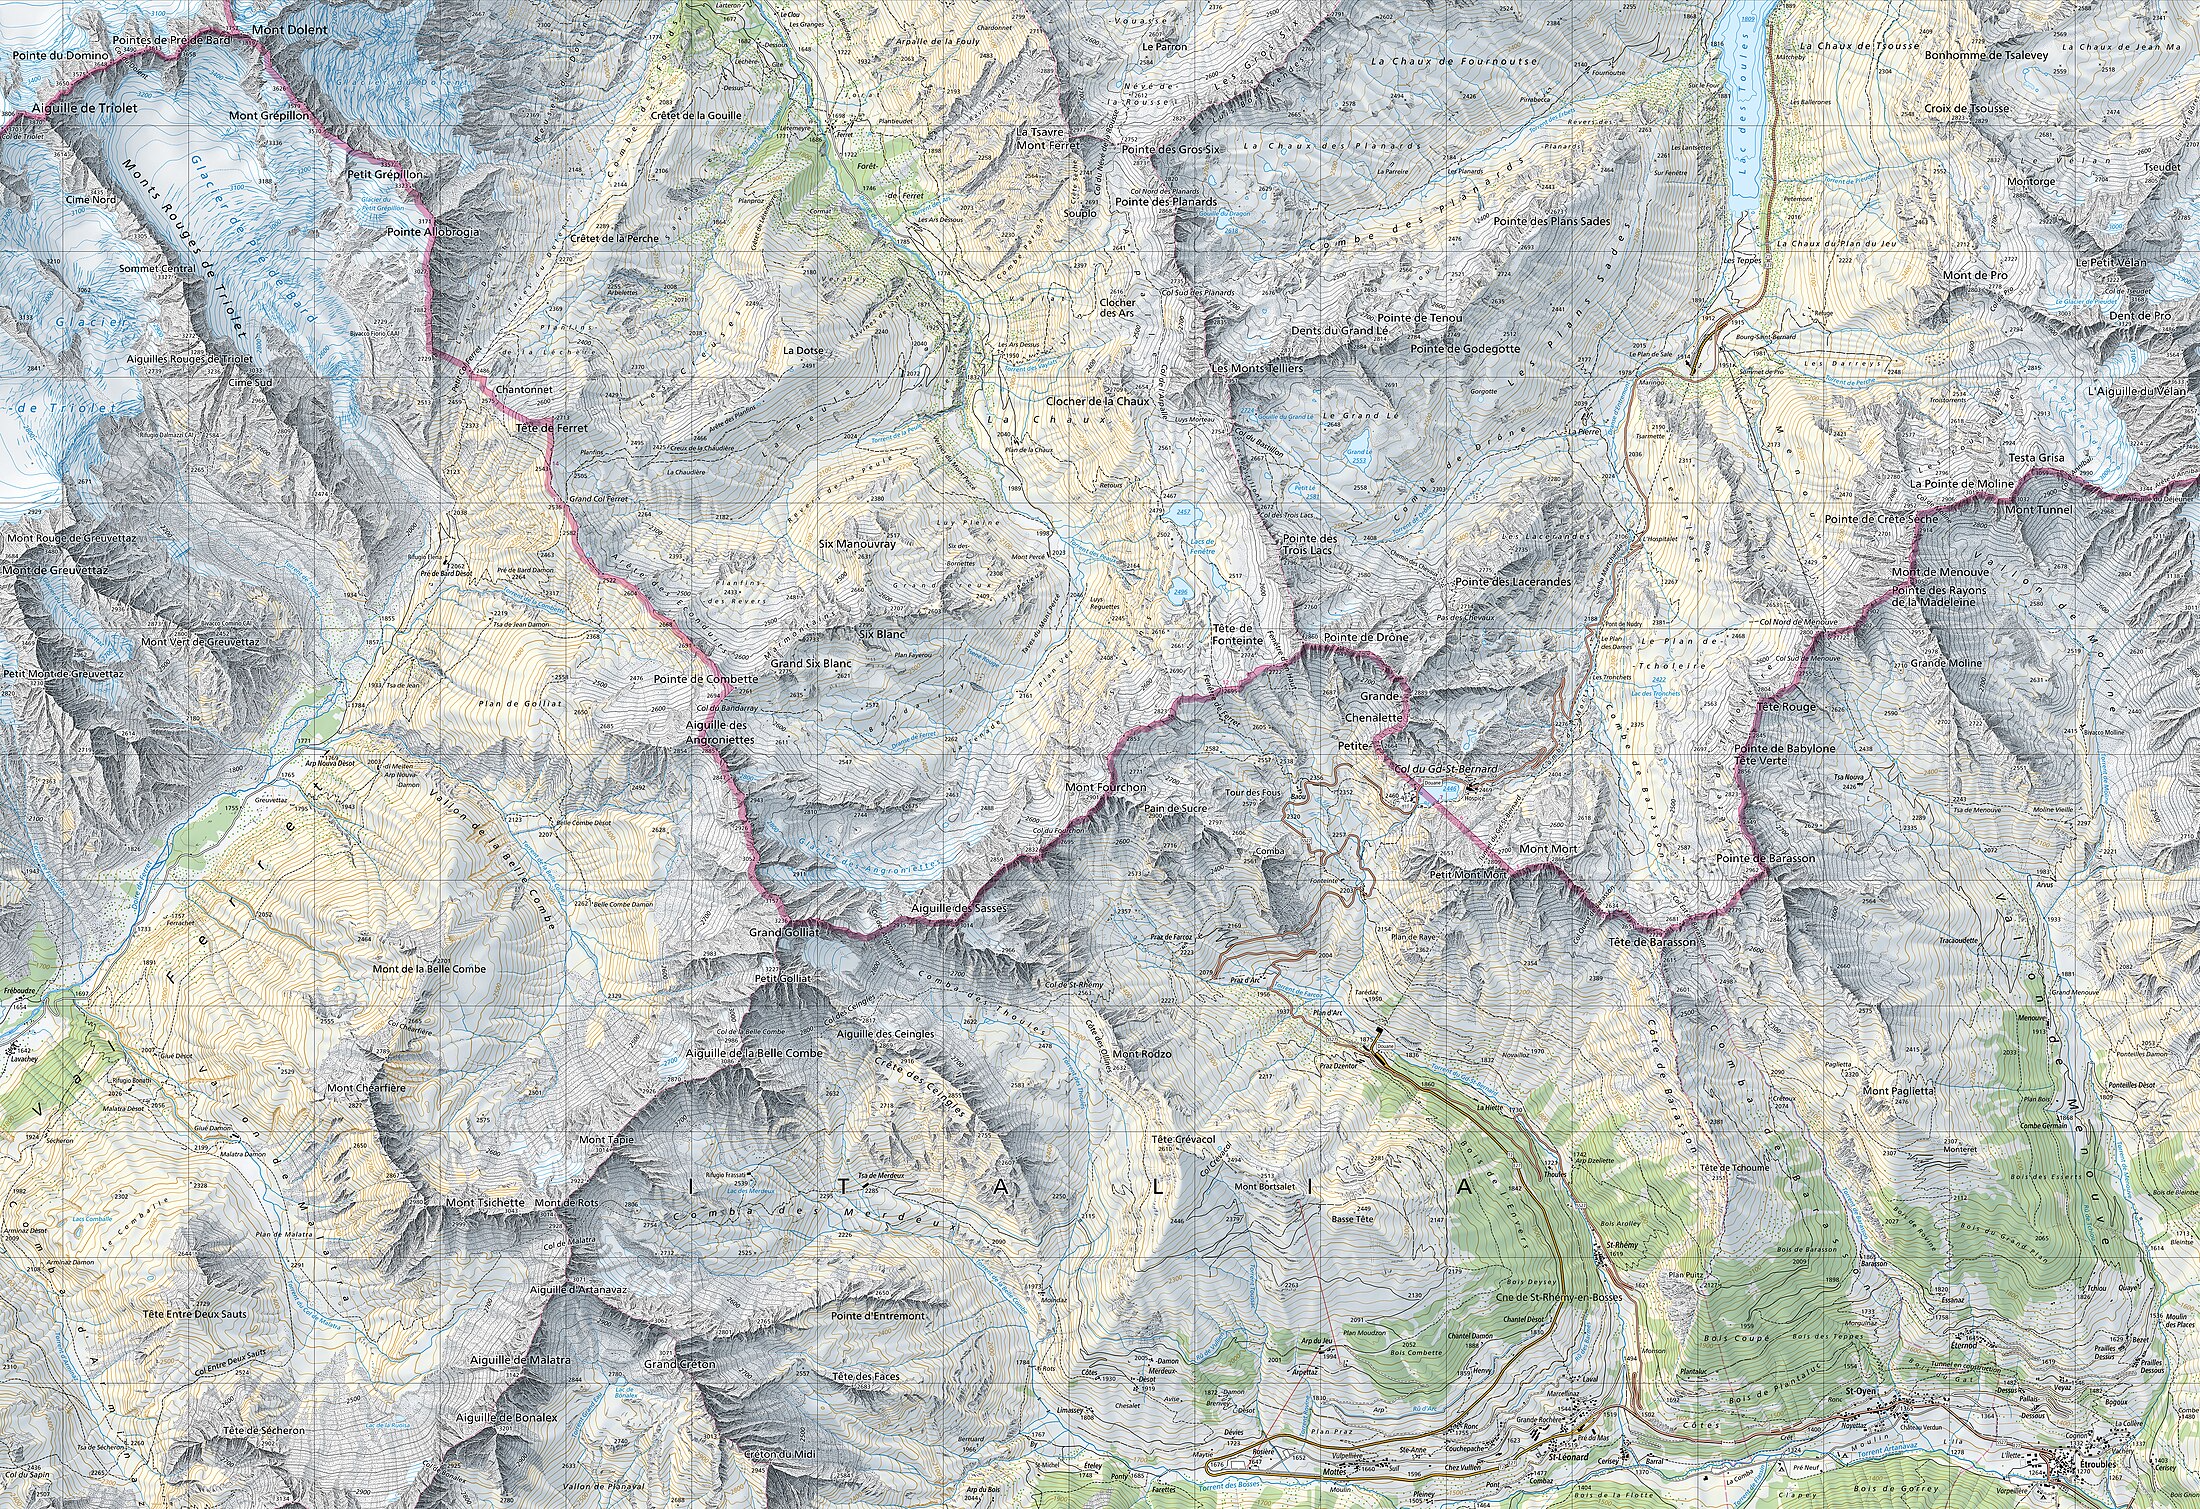 The Great St Bernard Pass on the 1:25'000 Swiss National Map